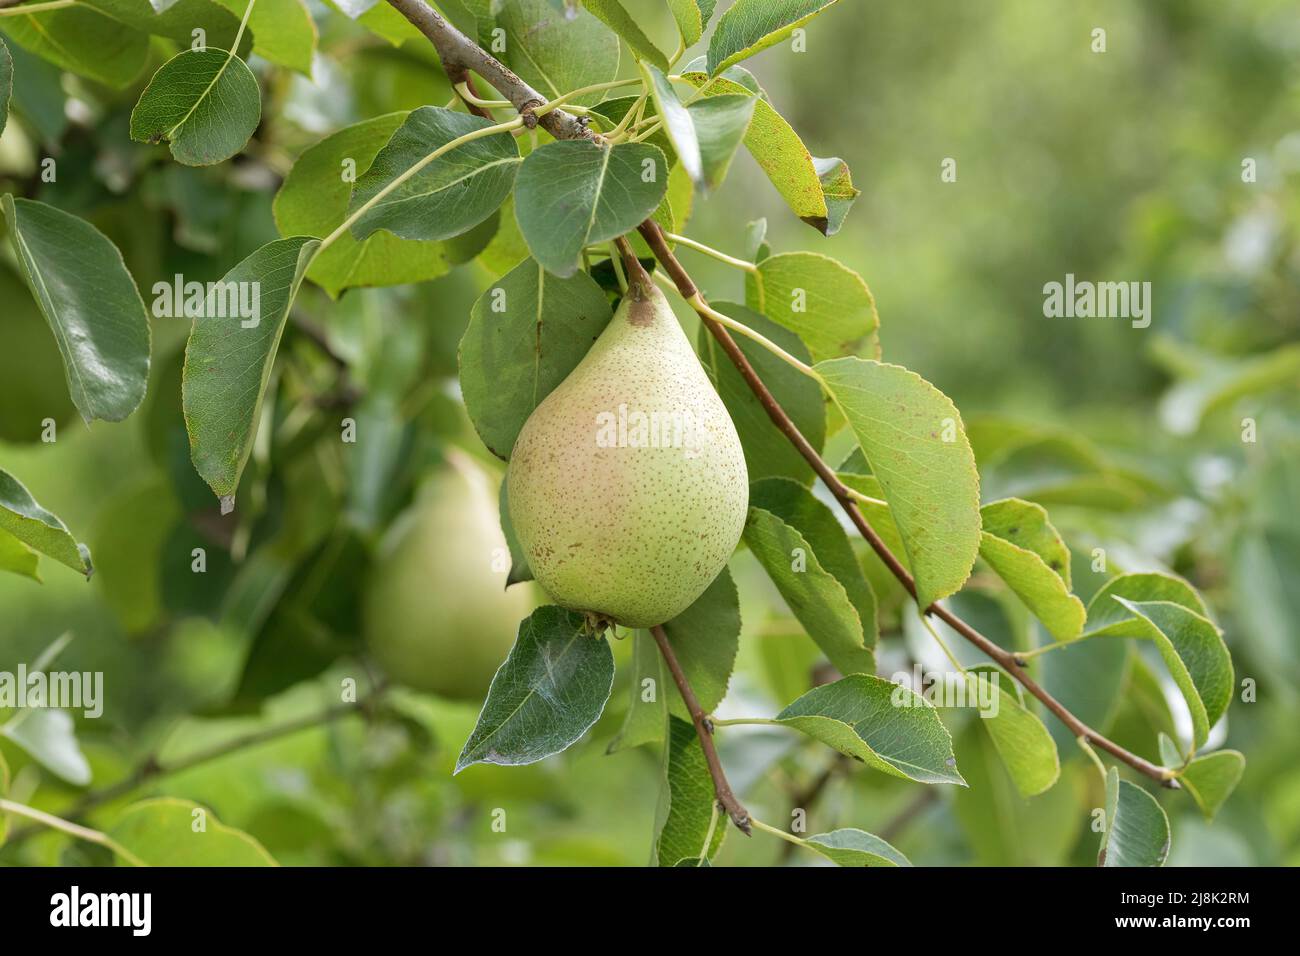 Common pear (Pyrus communis 'Pastorenbirne', Pyrus communis Pastorenbirne), on a tree, cultivar Pastorenbirne, Bundesrepublik Deutschland Stock Photo